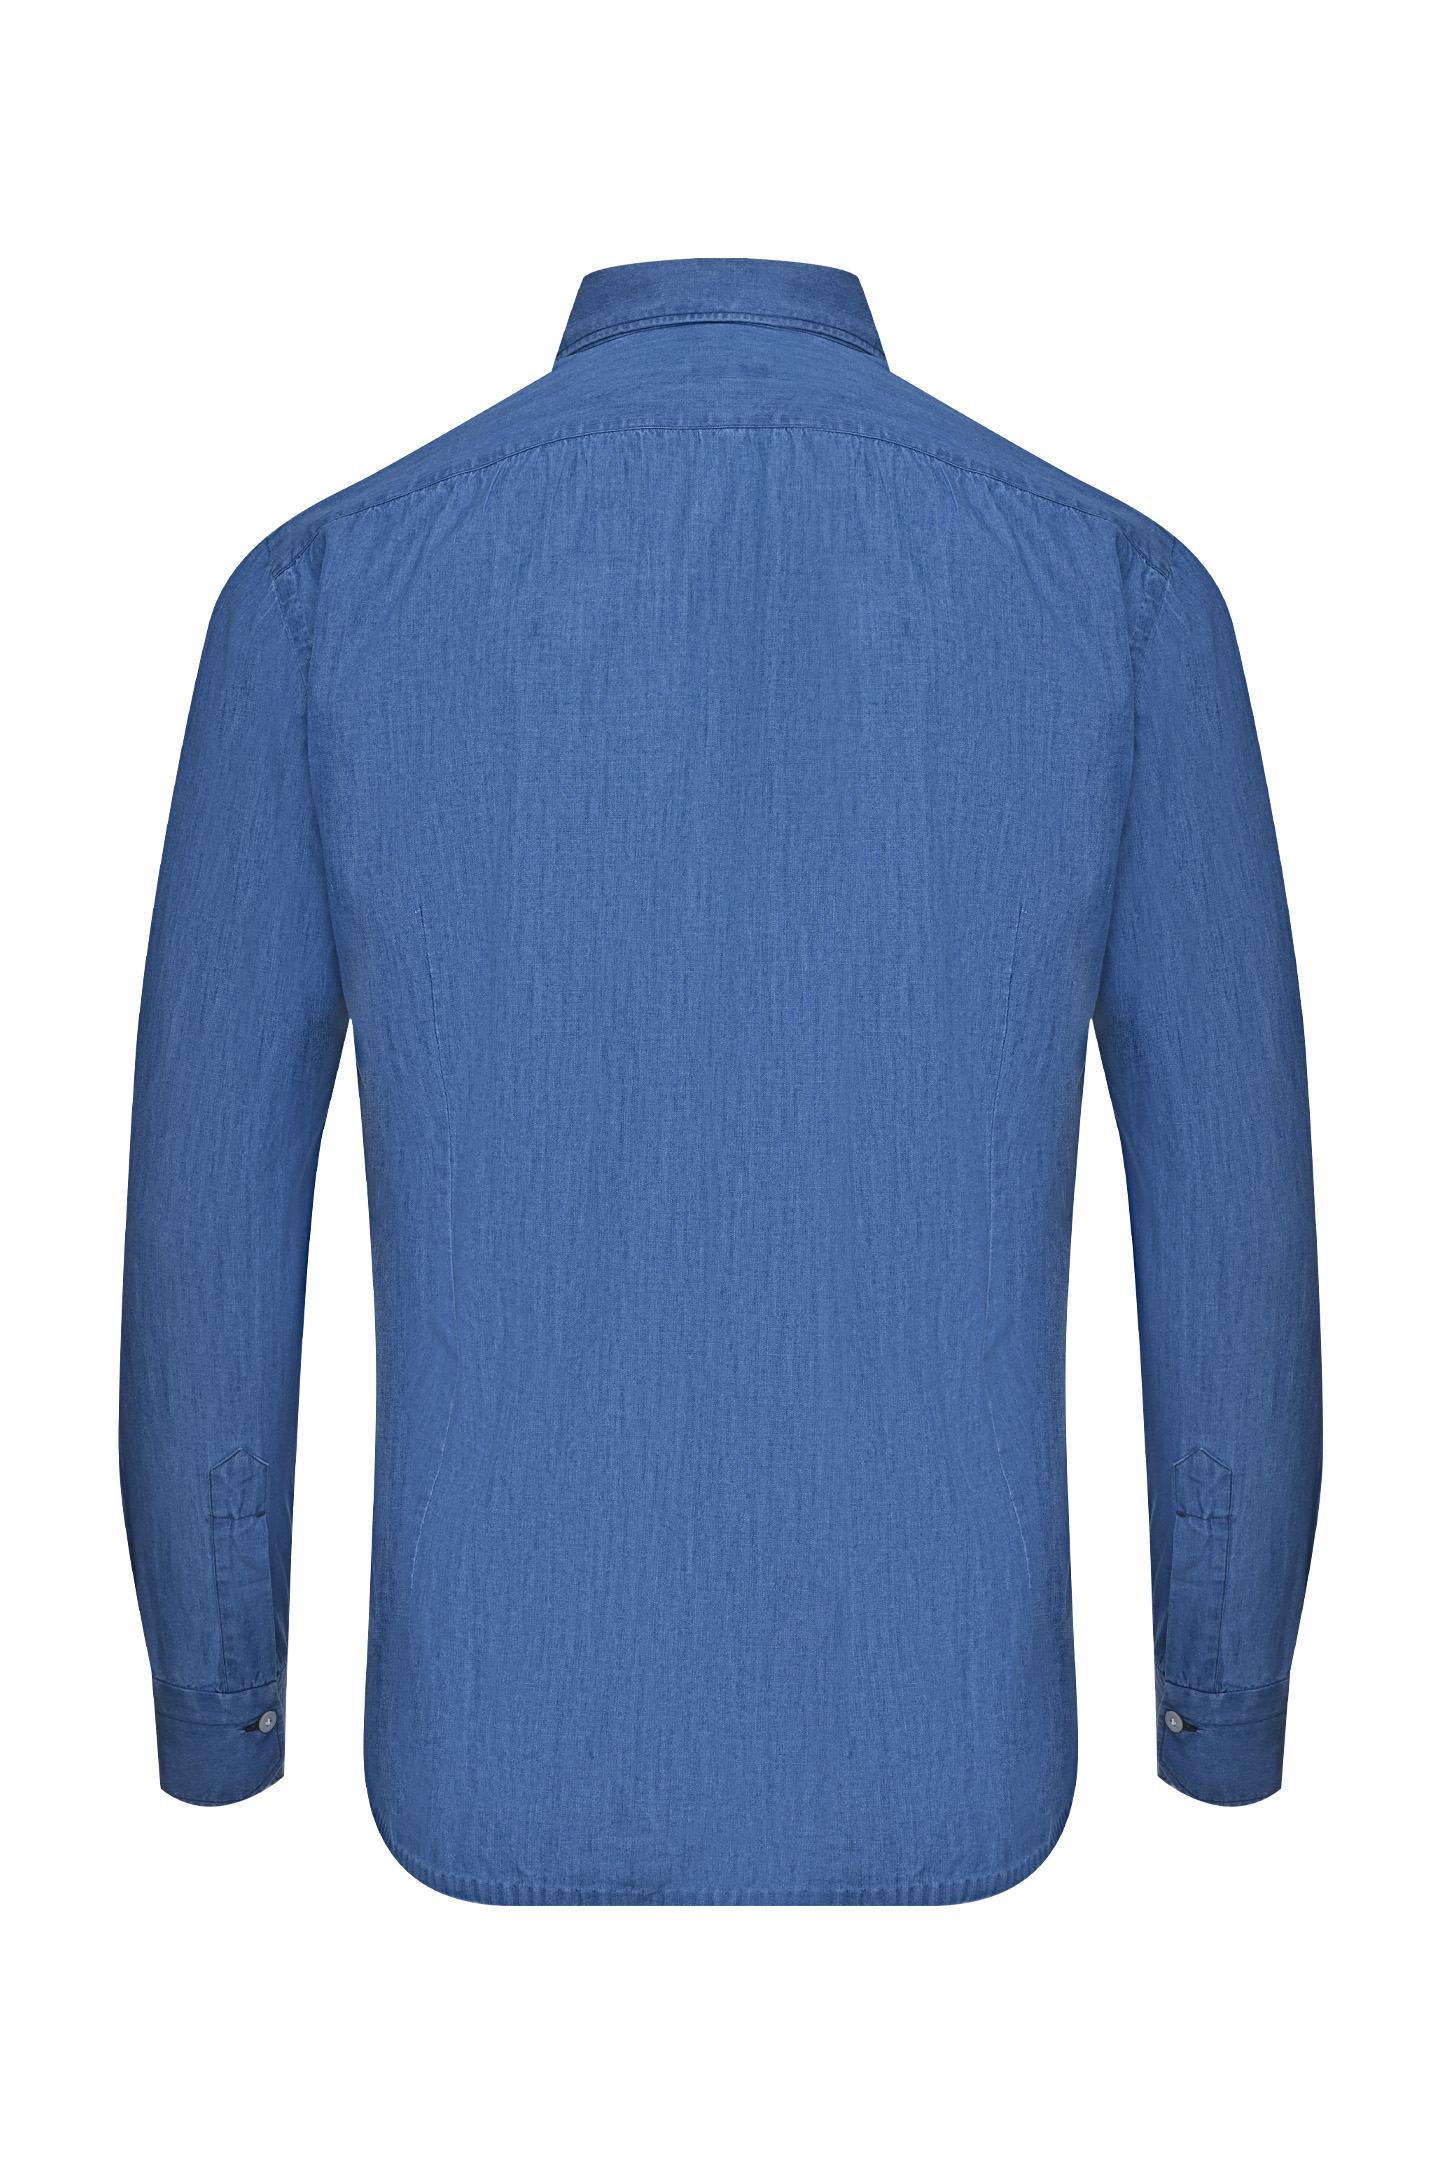 Рубашка KITON UMCNERH080180, цвет: Синий, Мужской